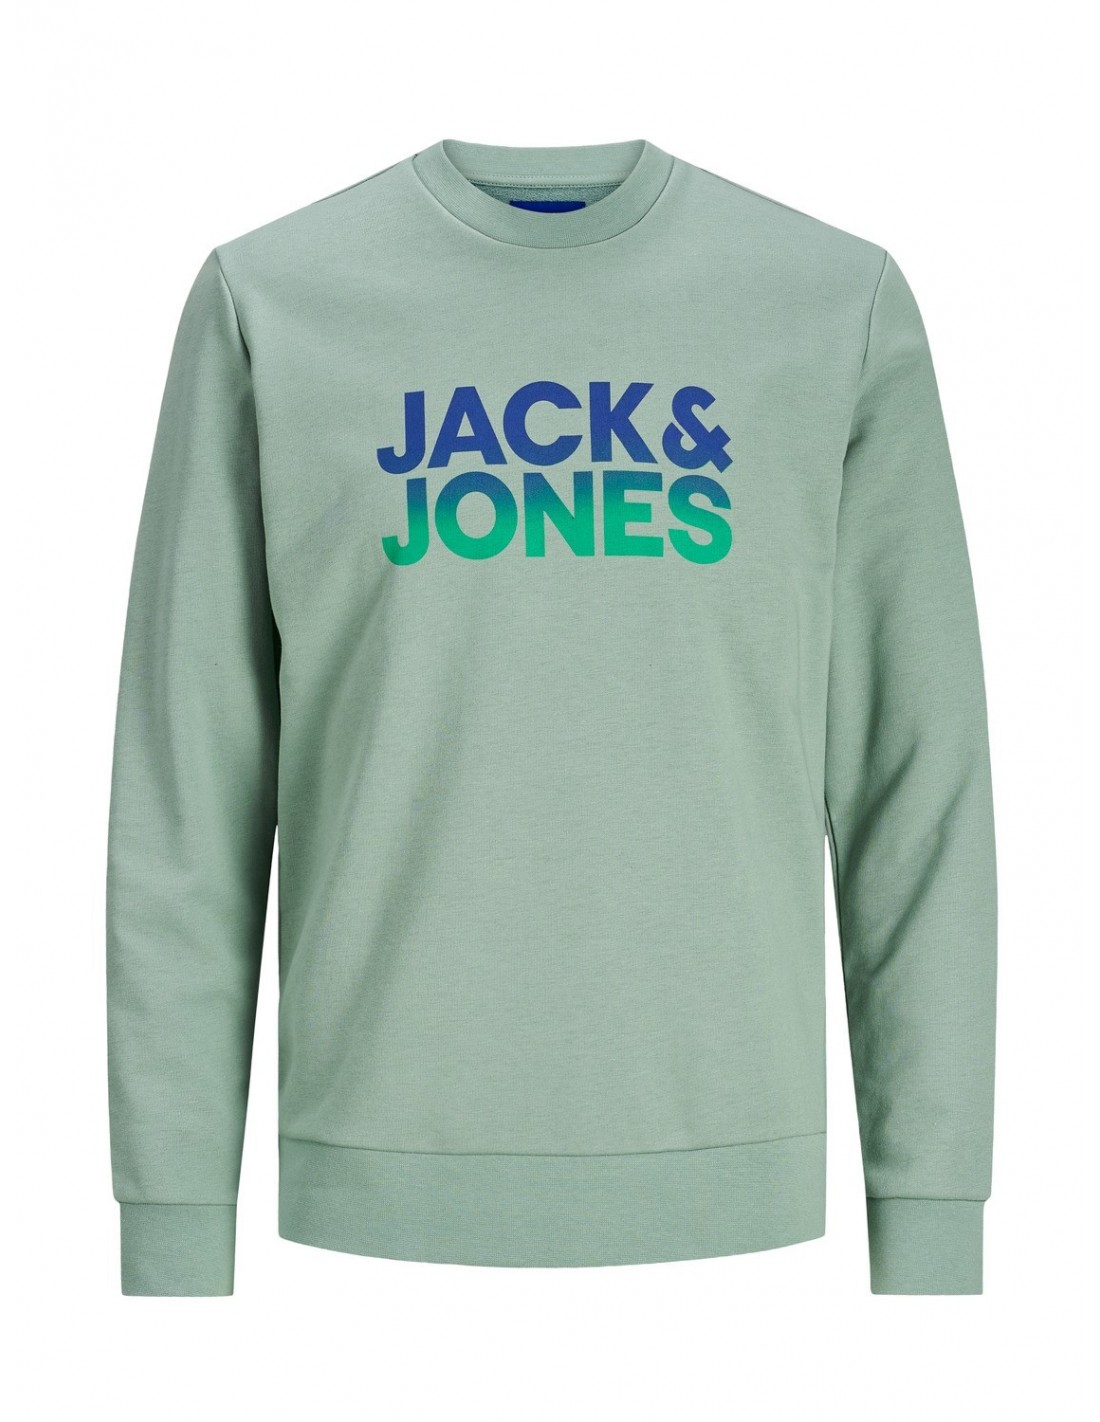 Jack & Jones sudadera cuello redondo color light green